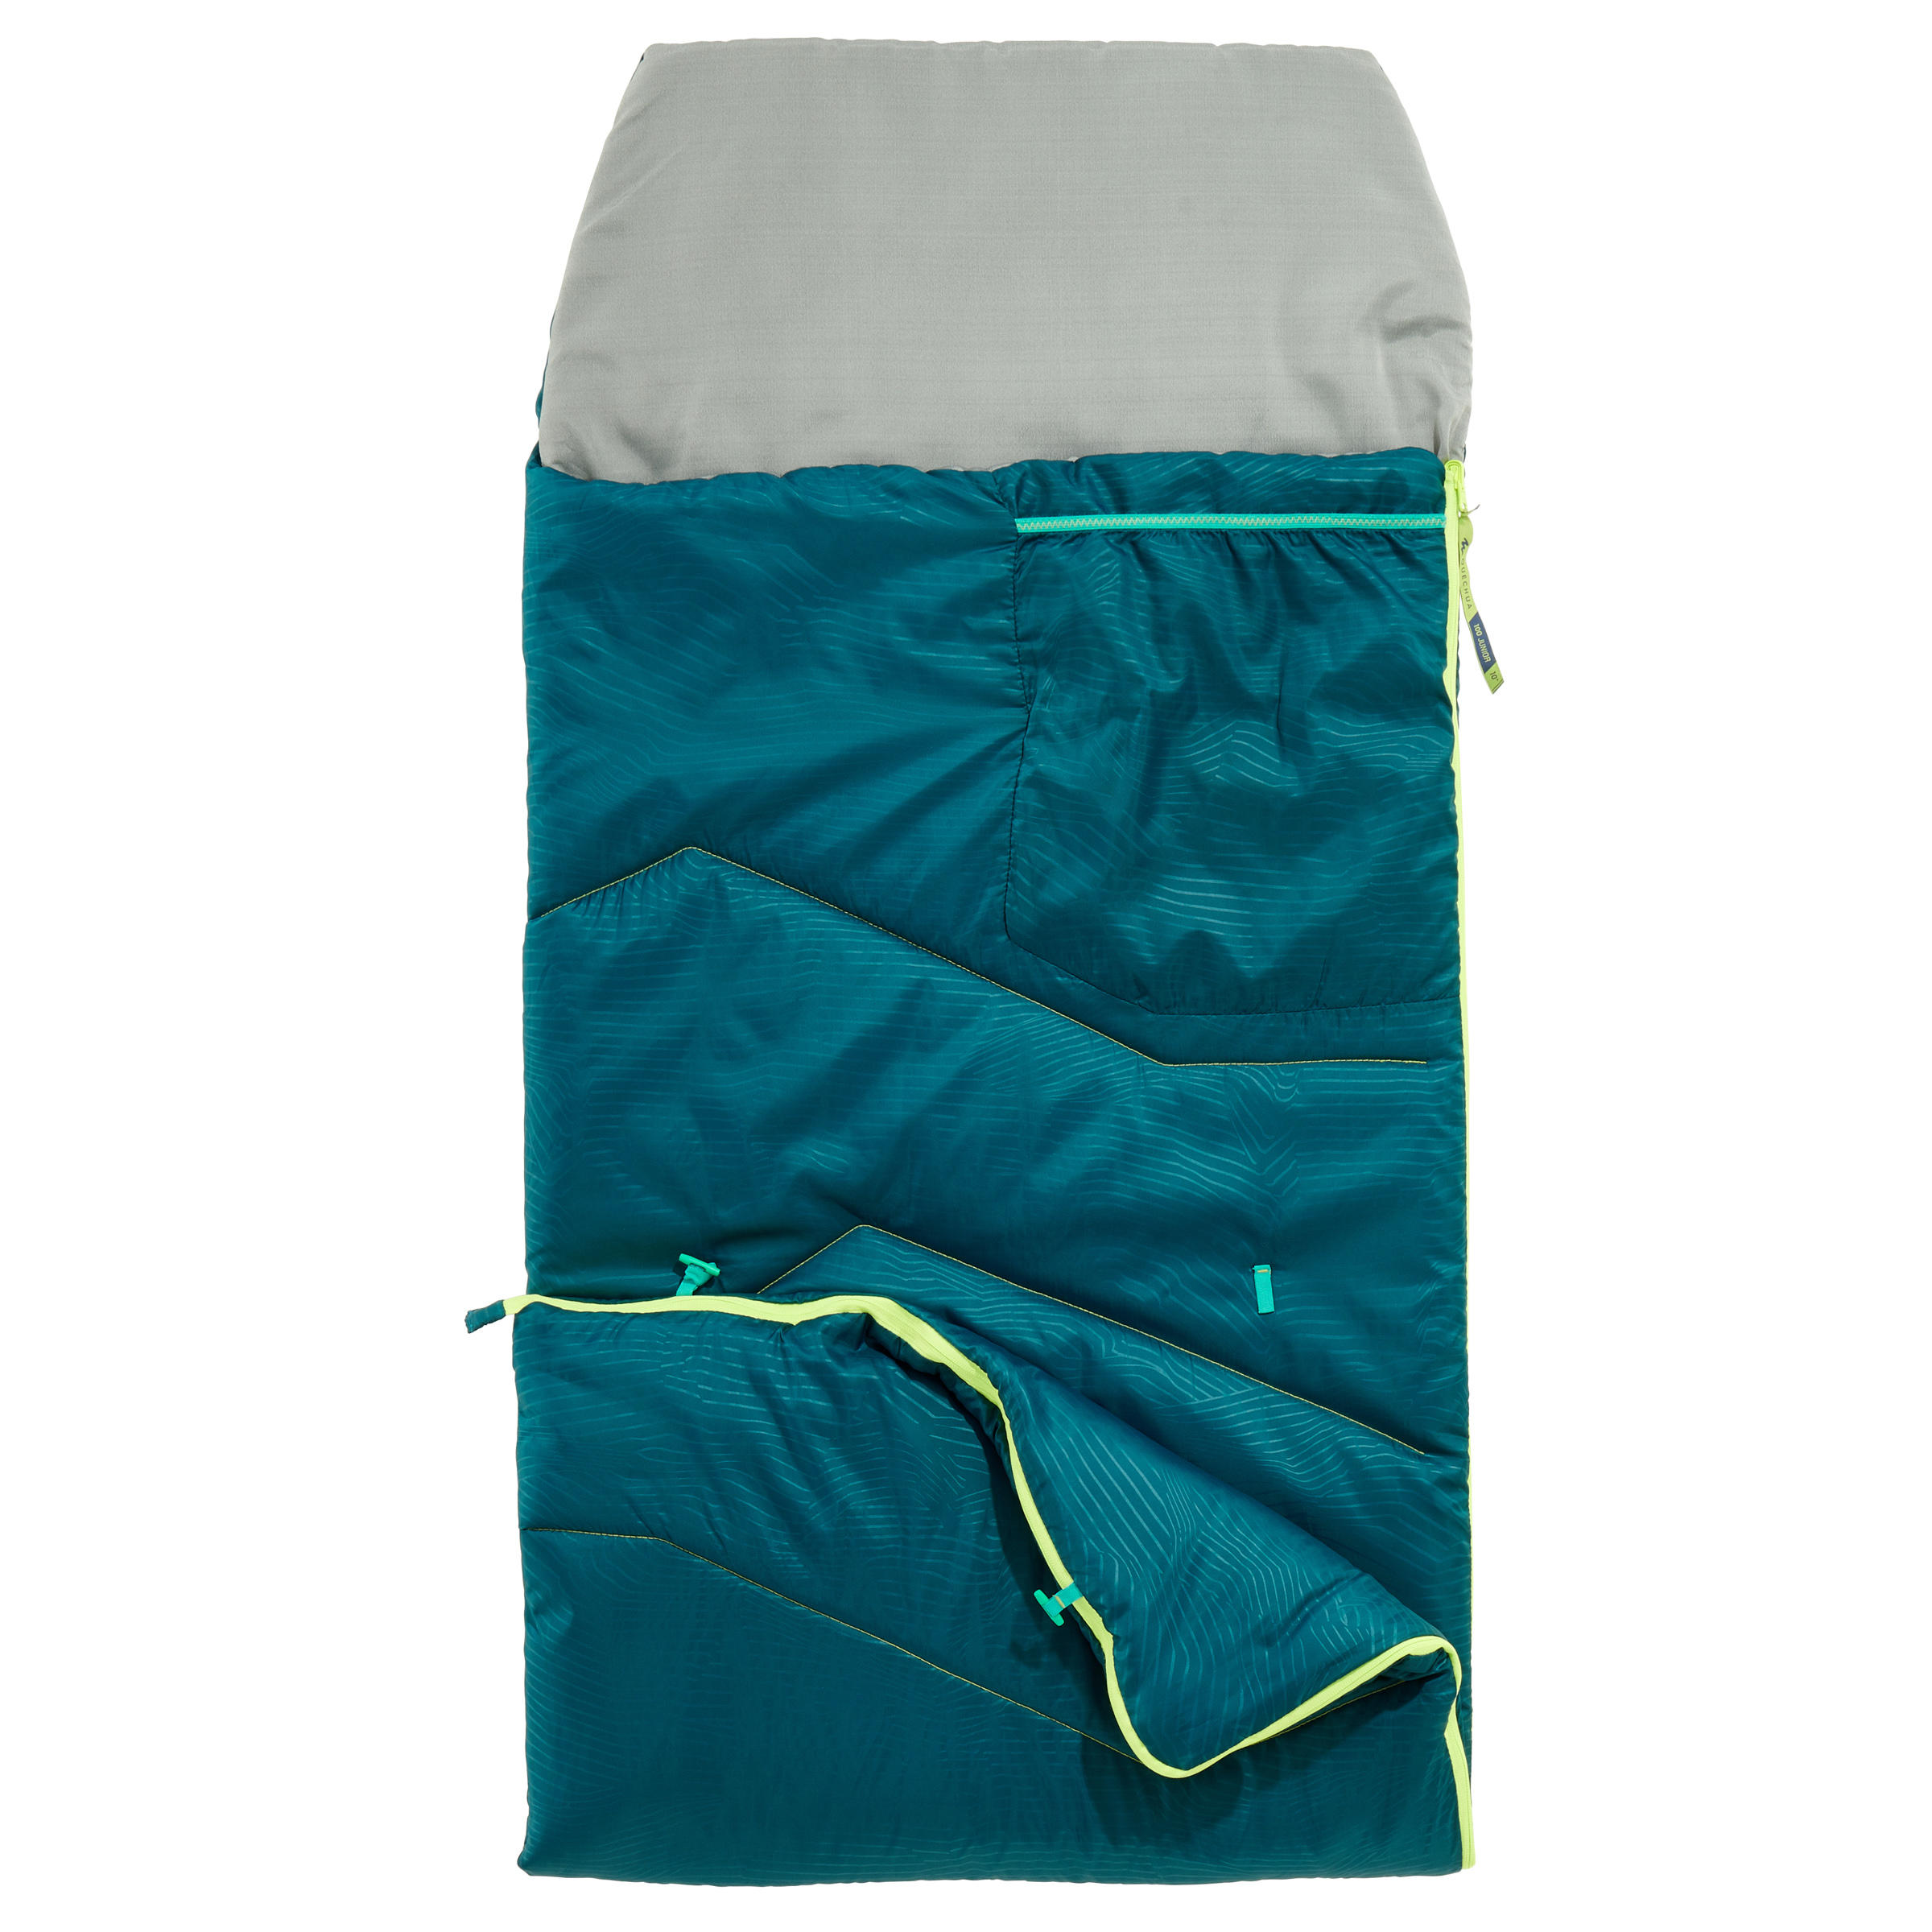 blue sleeping bag